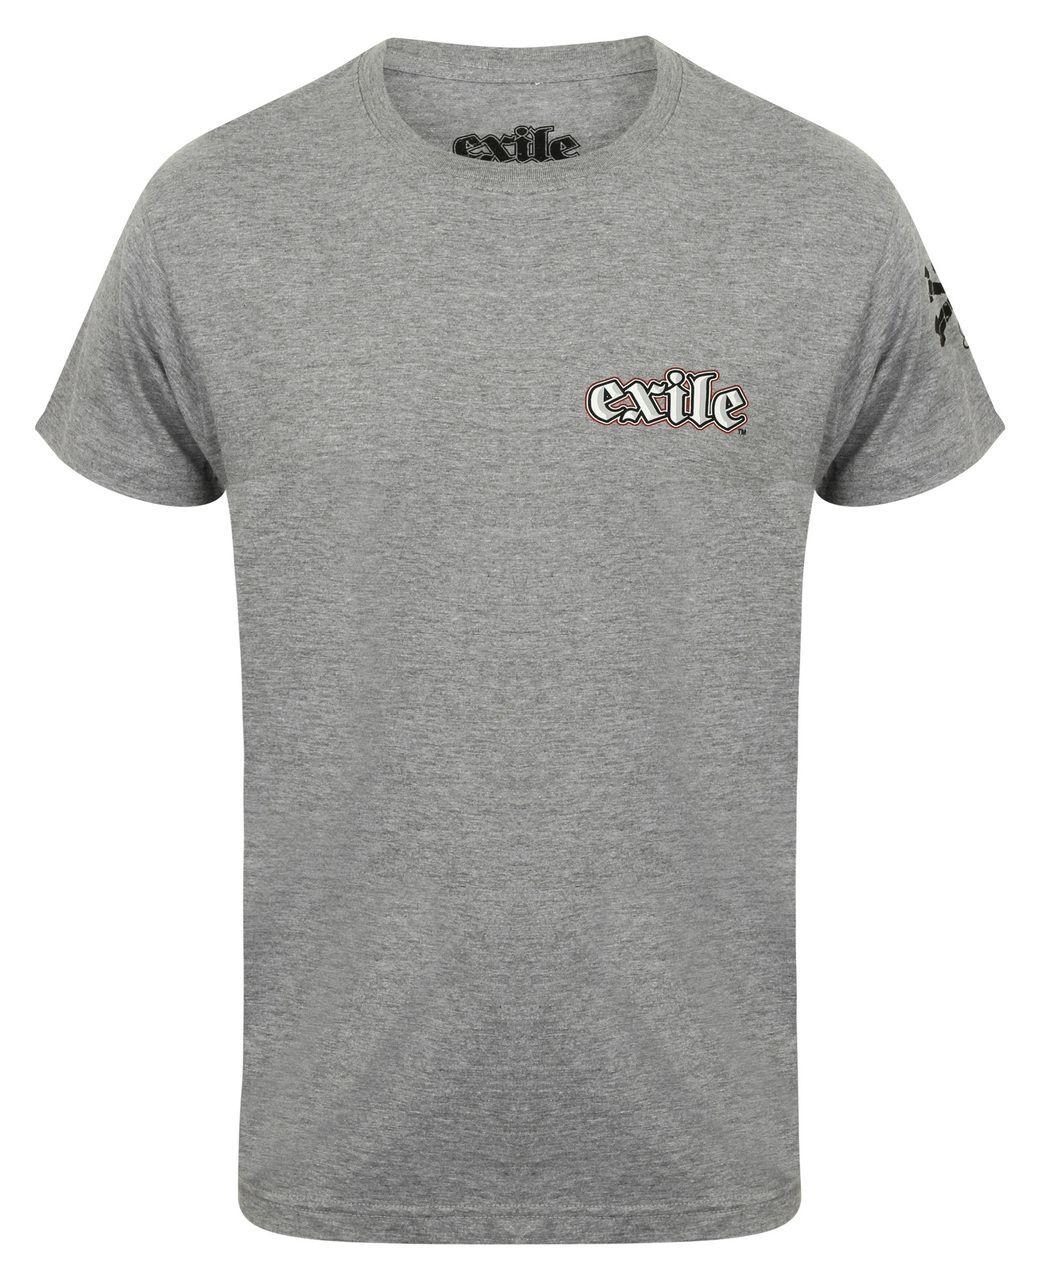 Exile Oval Logo - Oval Exile Logo T-Shirt (Grey)